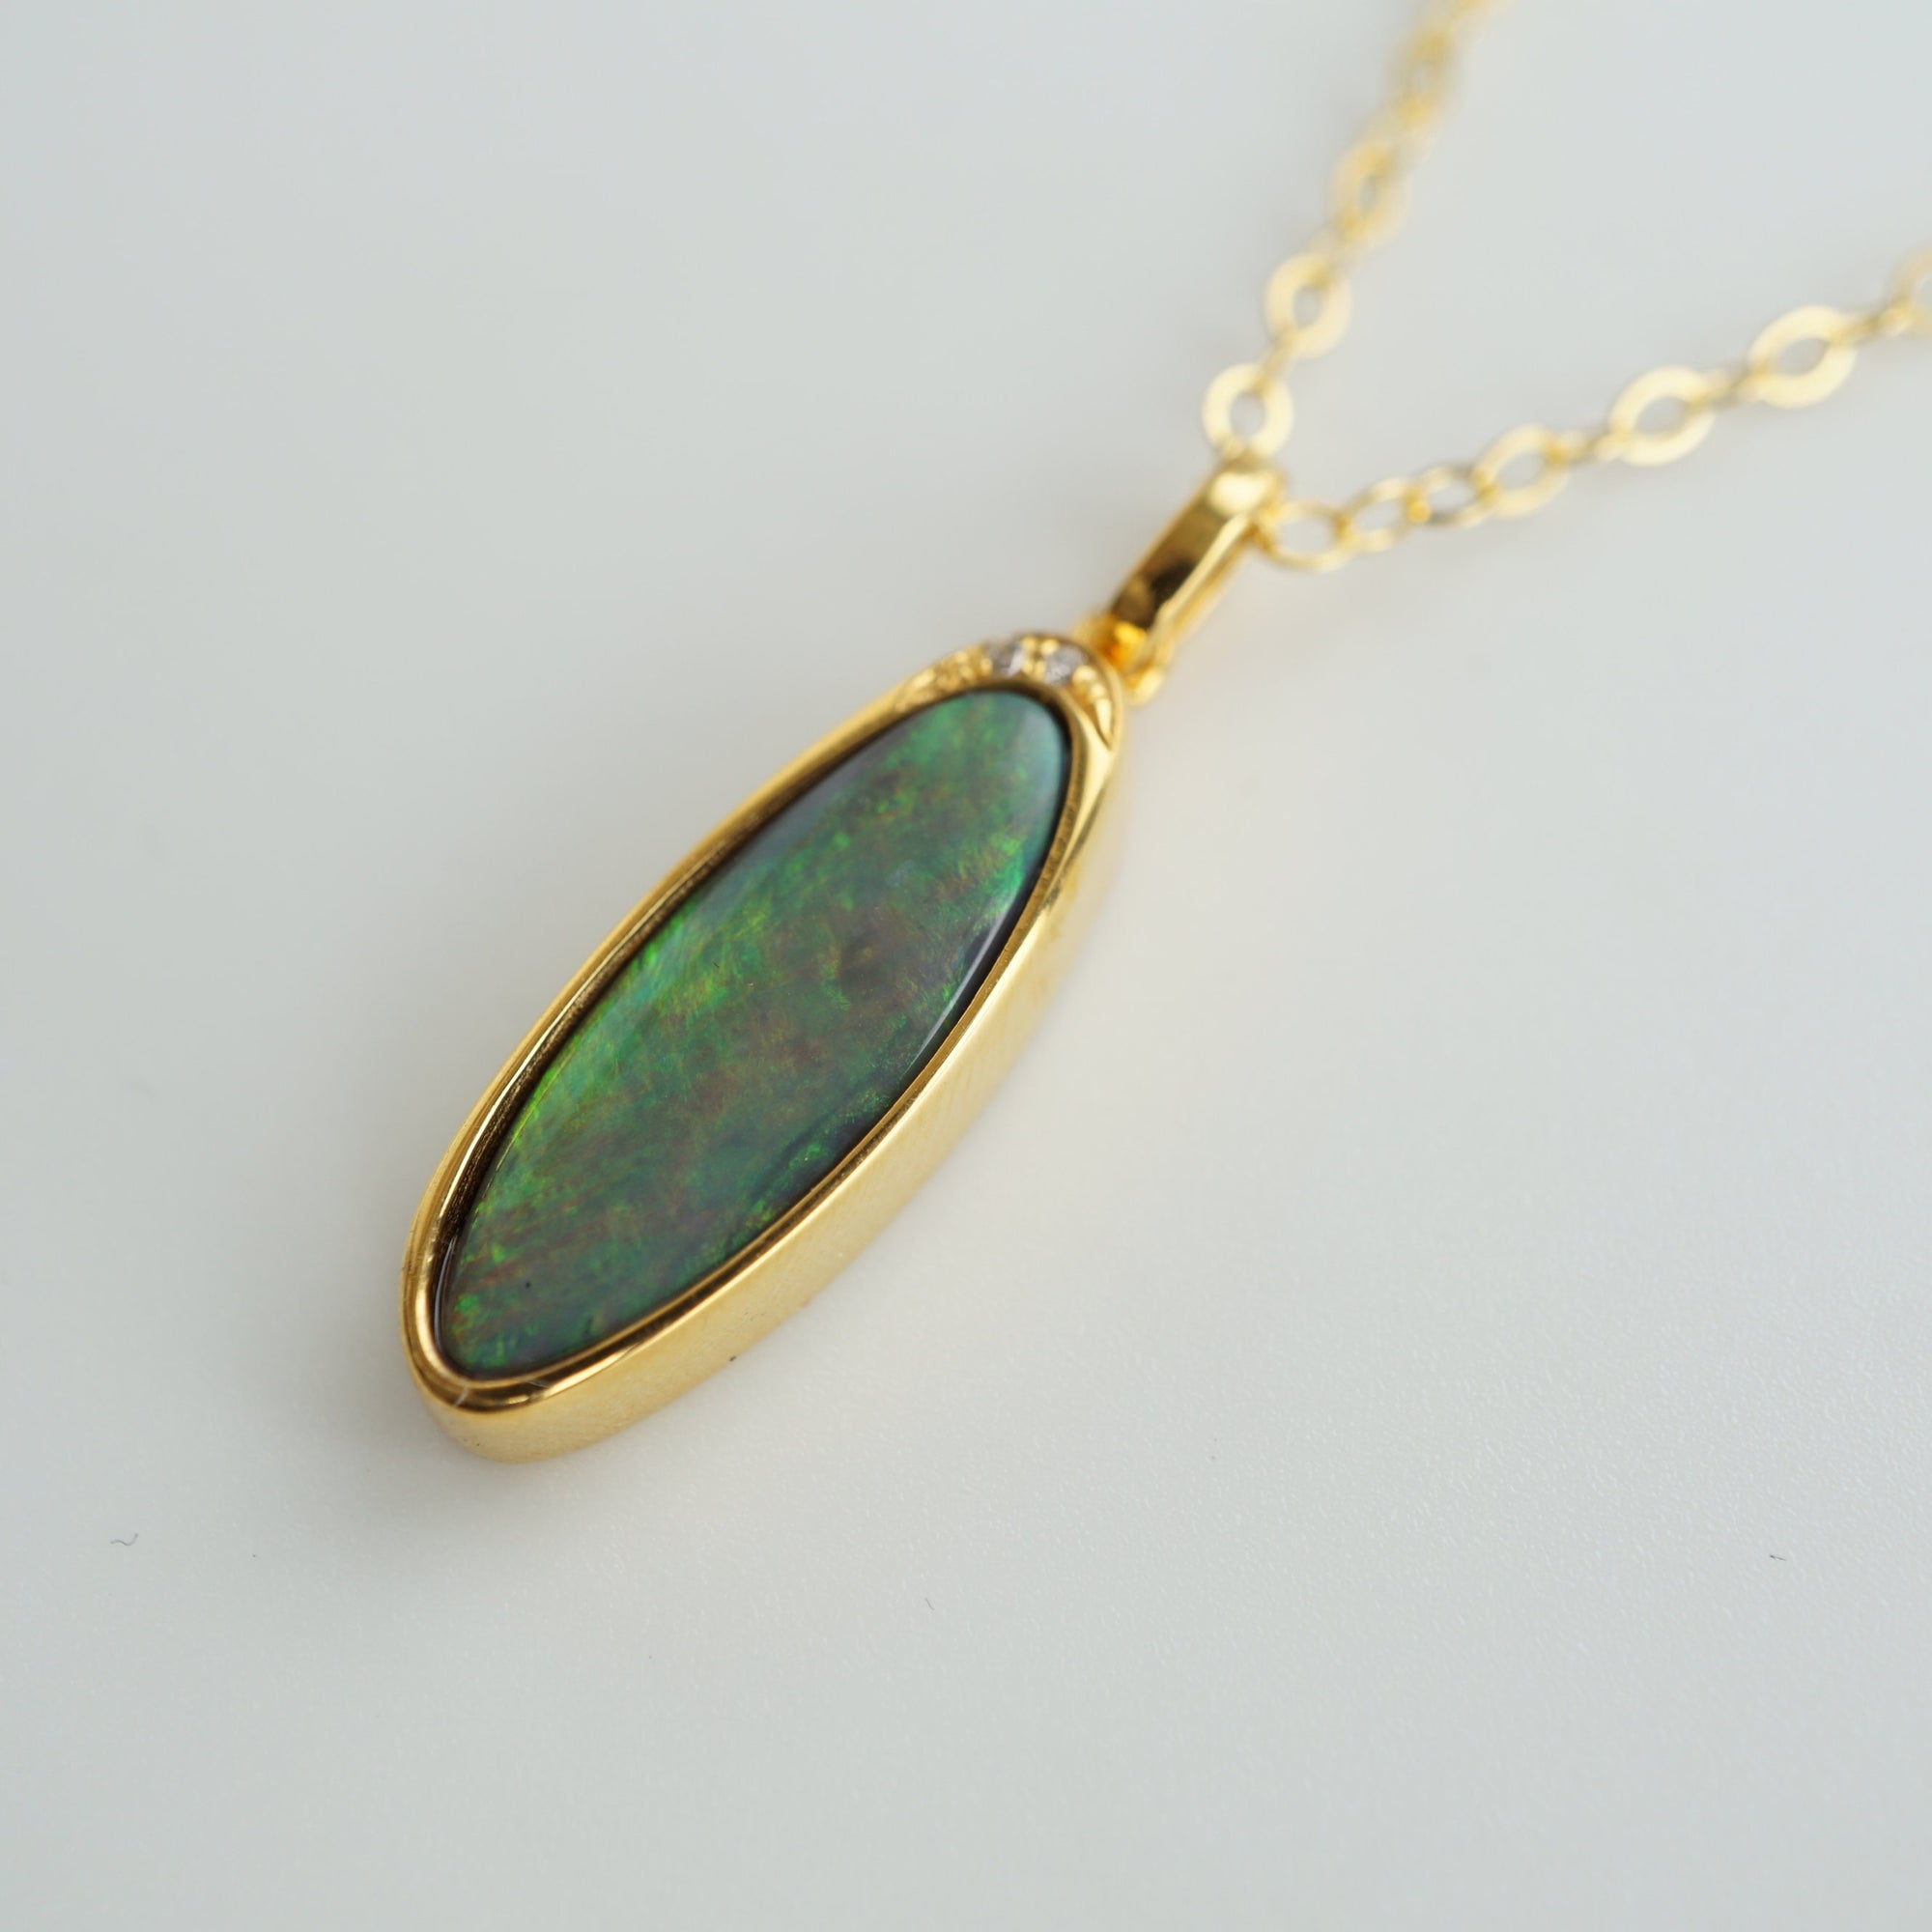 Rainbow Aura solid australian black opal necklace 14k solid gold, genuine black australian opal necklace, black opal, gift for her birthday-Vsabel Jewellery